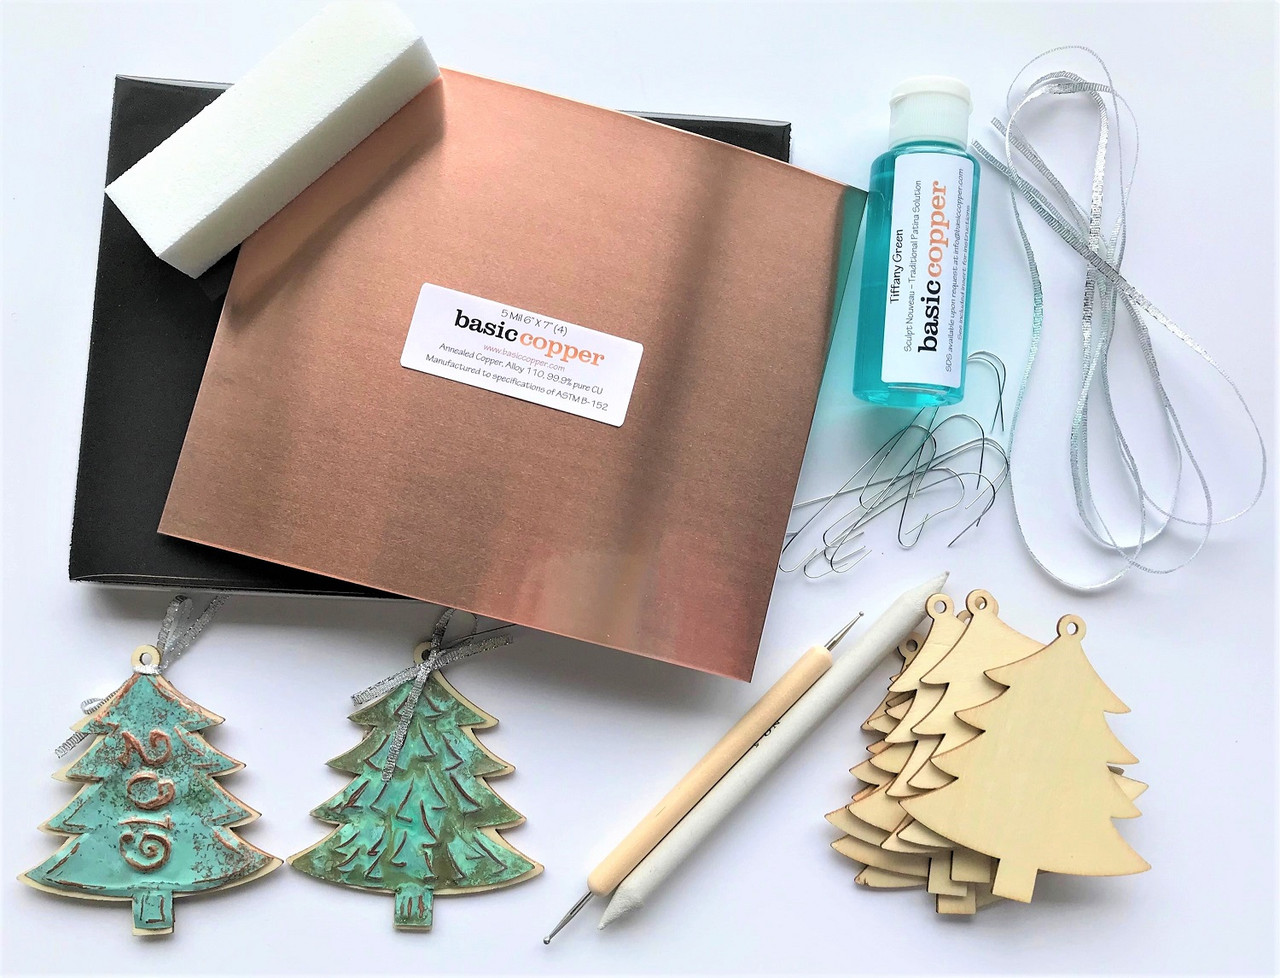 DIY Christmas Ornament Kit - Tree